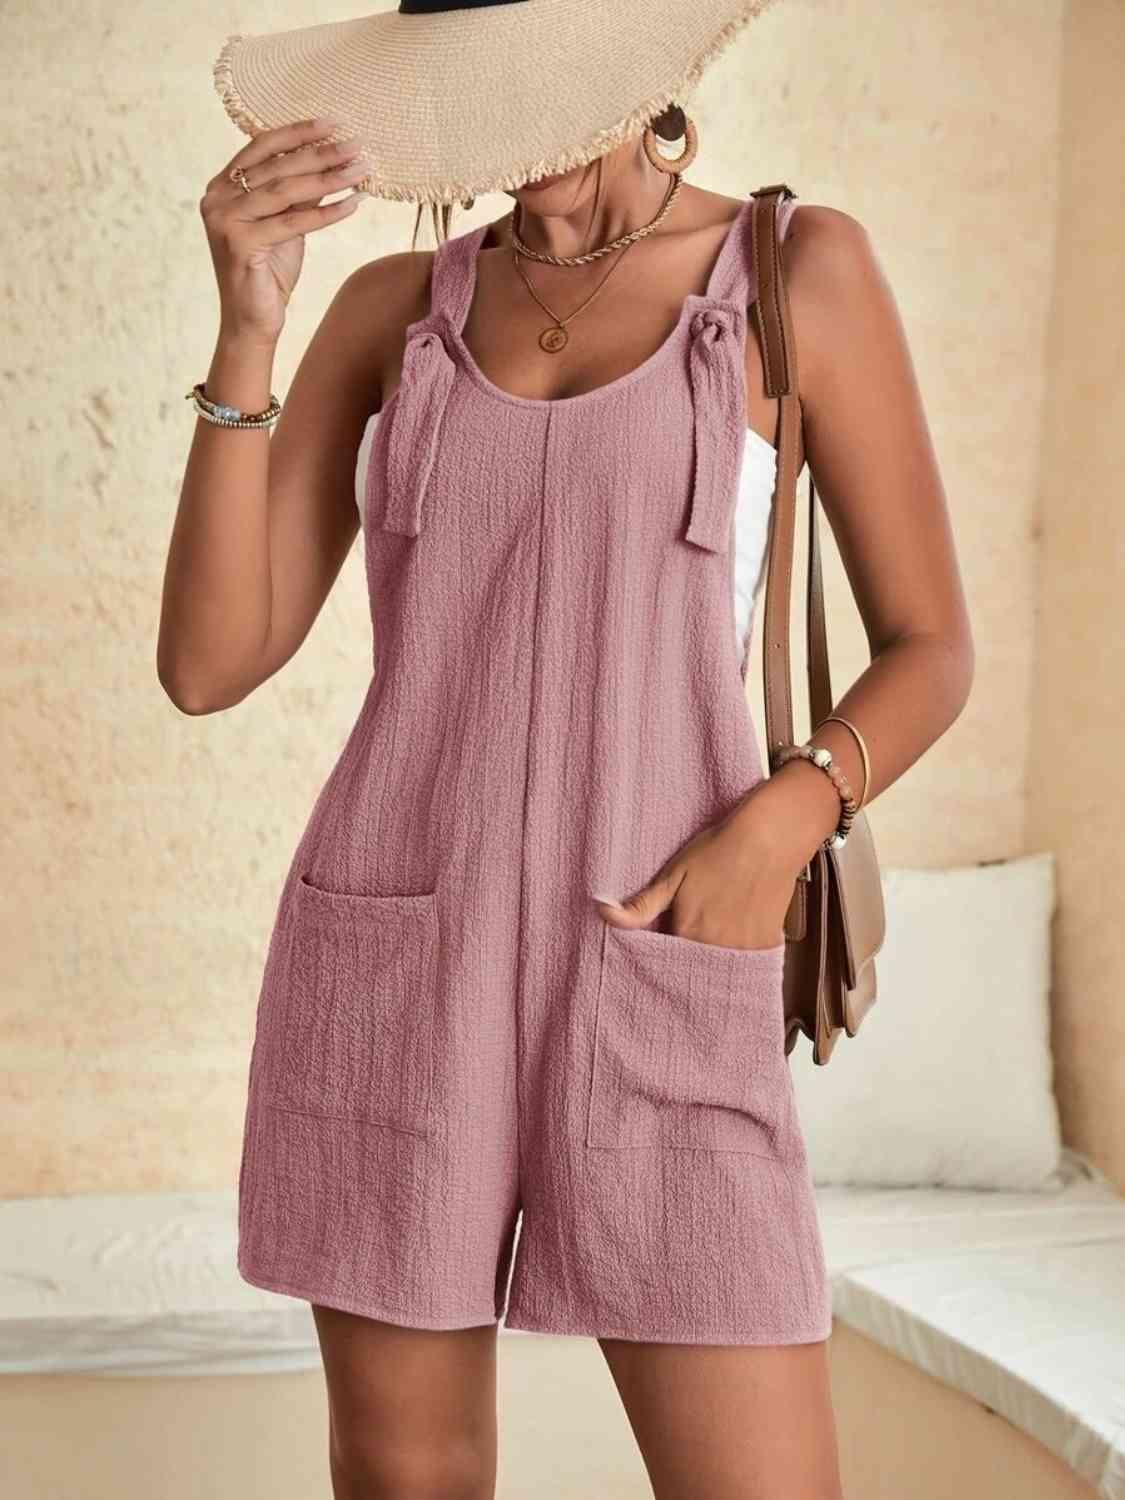 Bona Fide Fashion - Full Size Scoop Neck Romper with Pockets - Women Fashion - Bona Fide Fashion